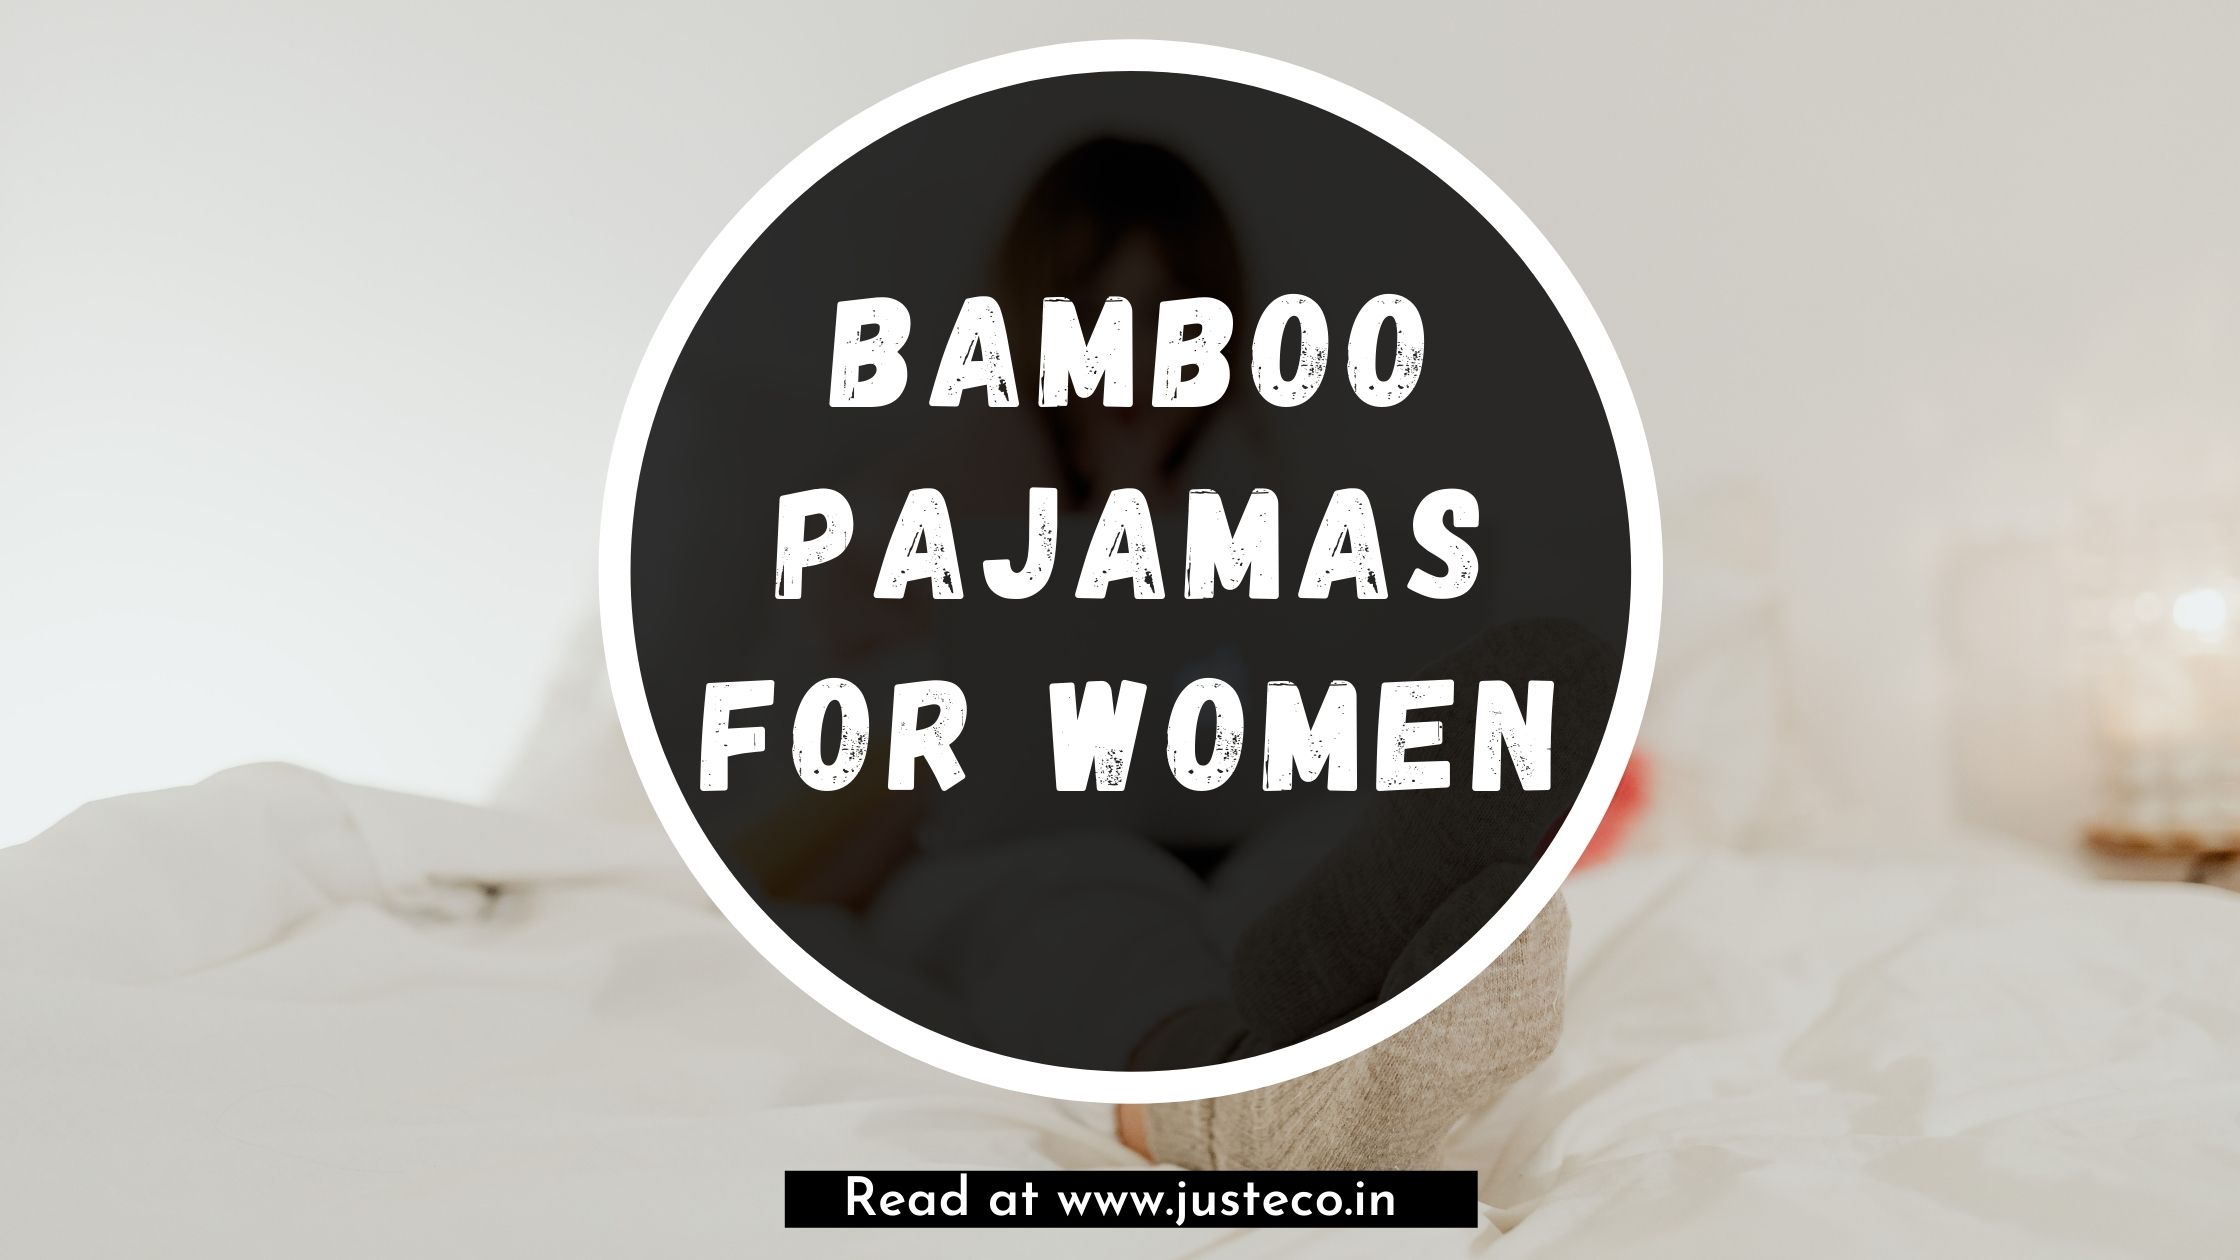 Bamboo Pajamas For Women